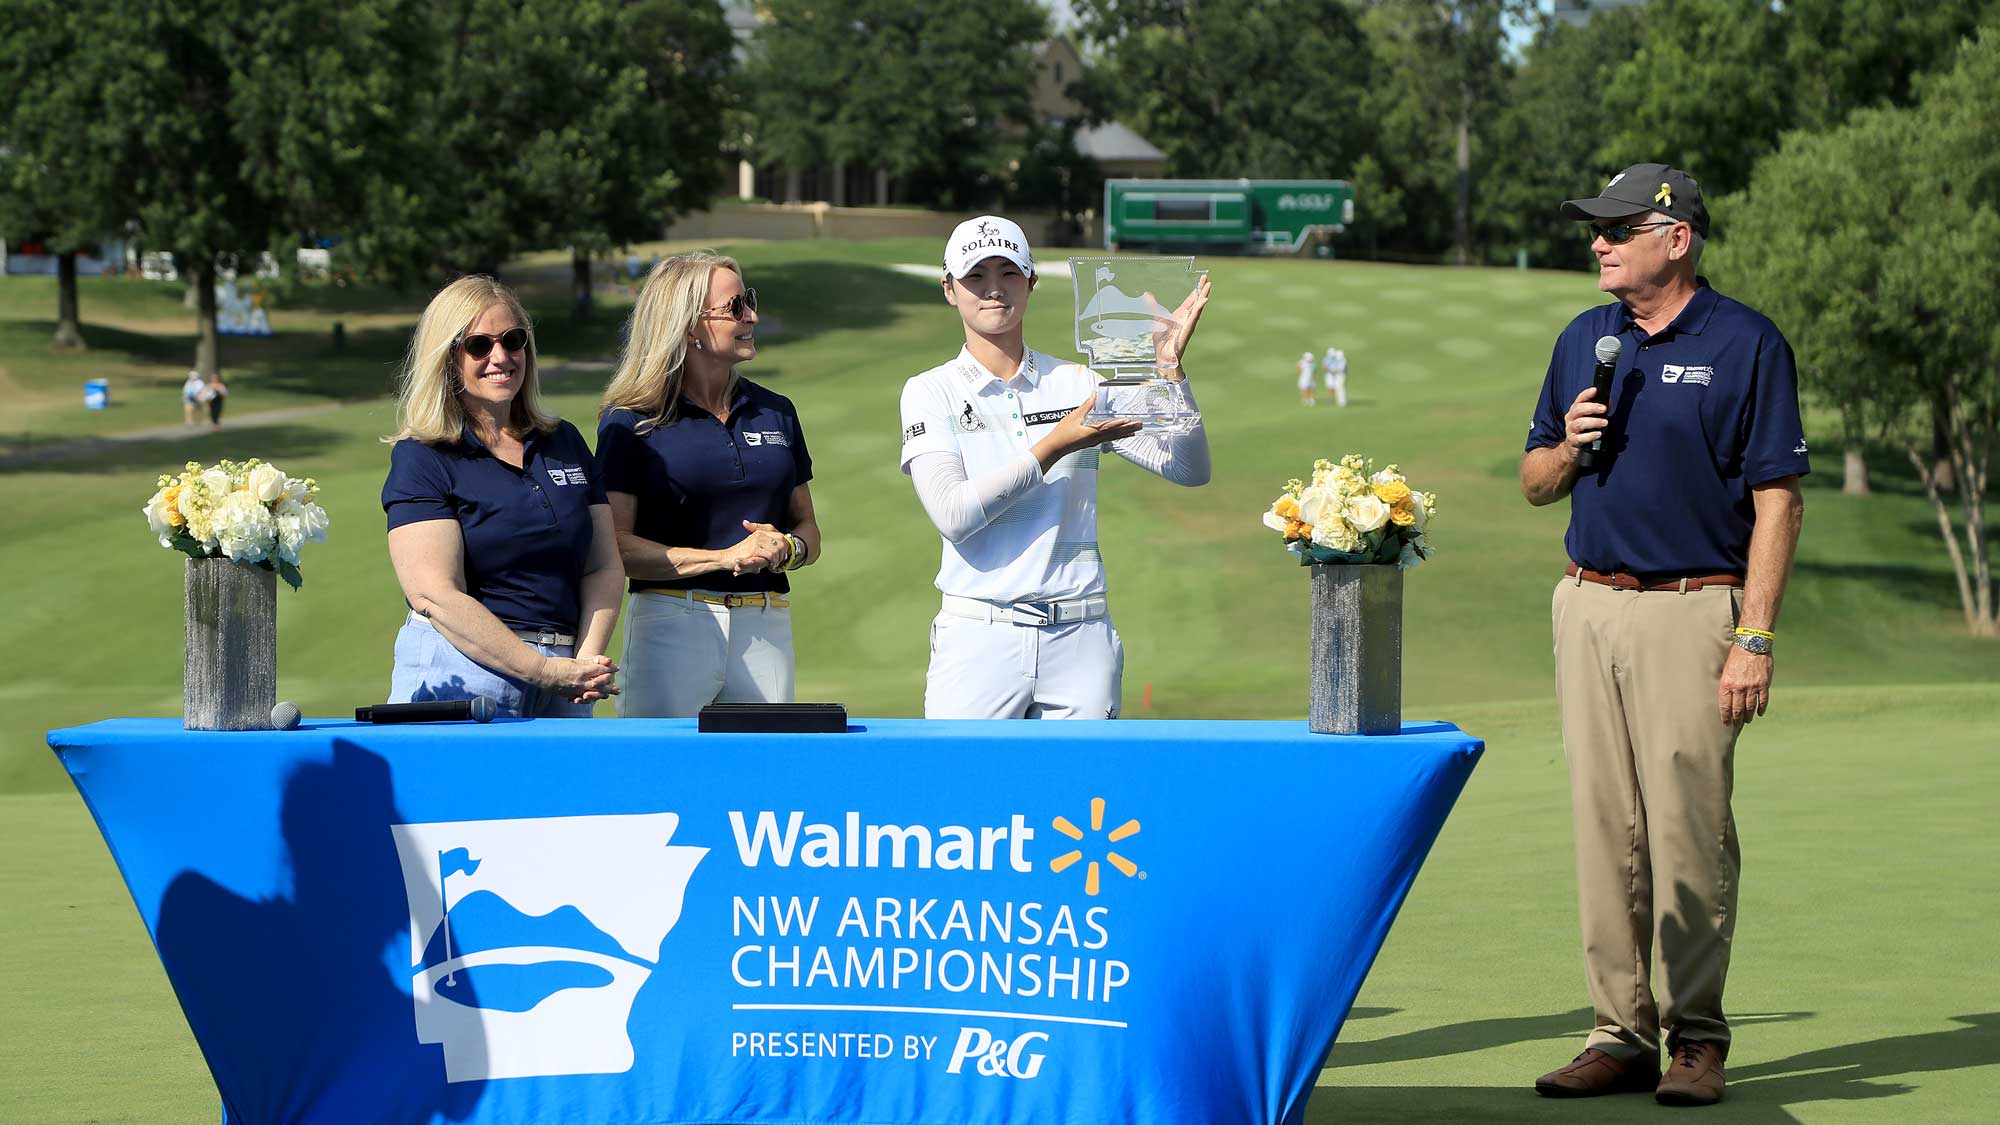 Walmart NW Arkansas Championship announces purse increase LPGA